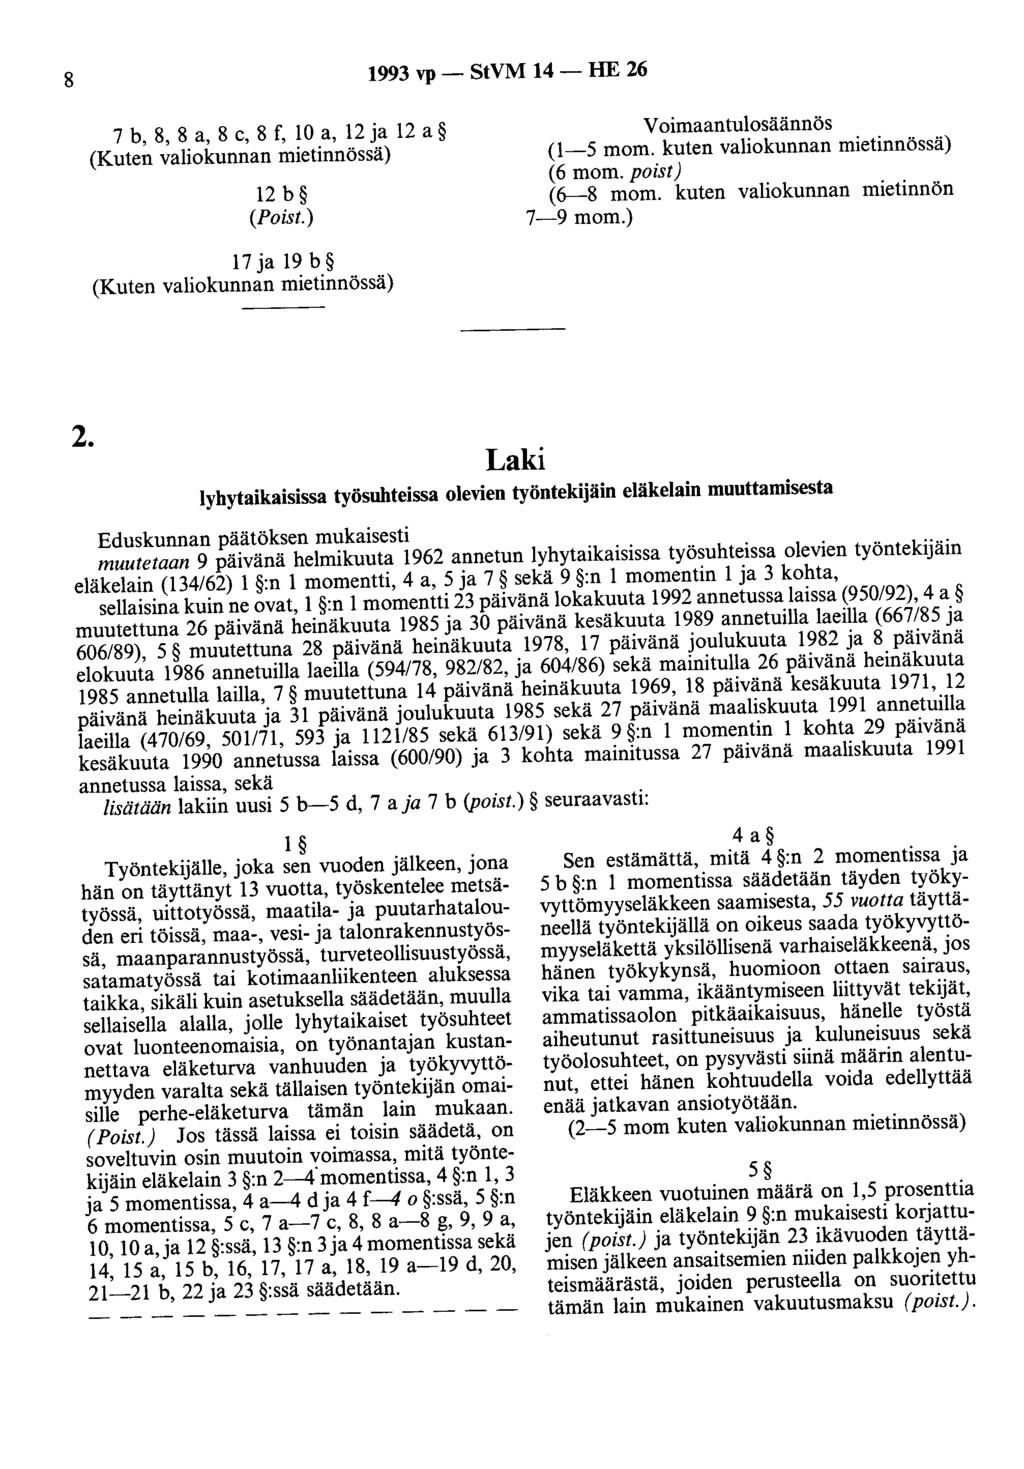 8 1993 vp - StVM 14 - HE 26 7 b, 8, 8 a, 8 c, 8 f, 10 a, 12 ja 12 a 12 b (Poist.) 17 ja 19 b Voimaantulosäännös (1-5 mom. kuten valiokunnan mietinnössä) (6 mom. poist) (6-8 mom.